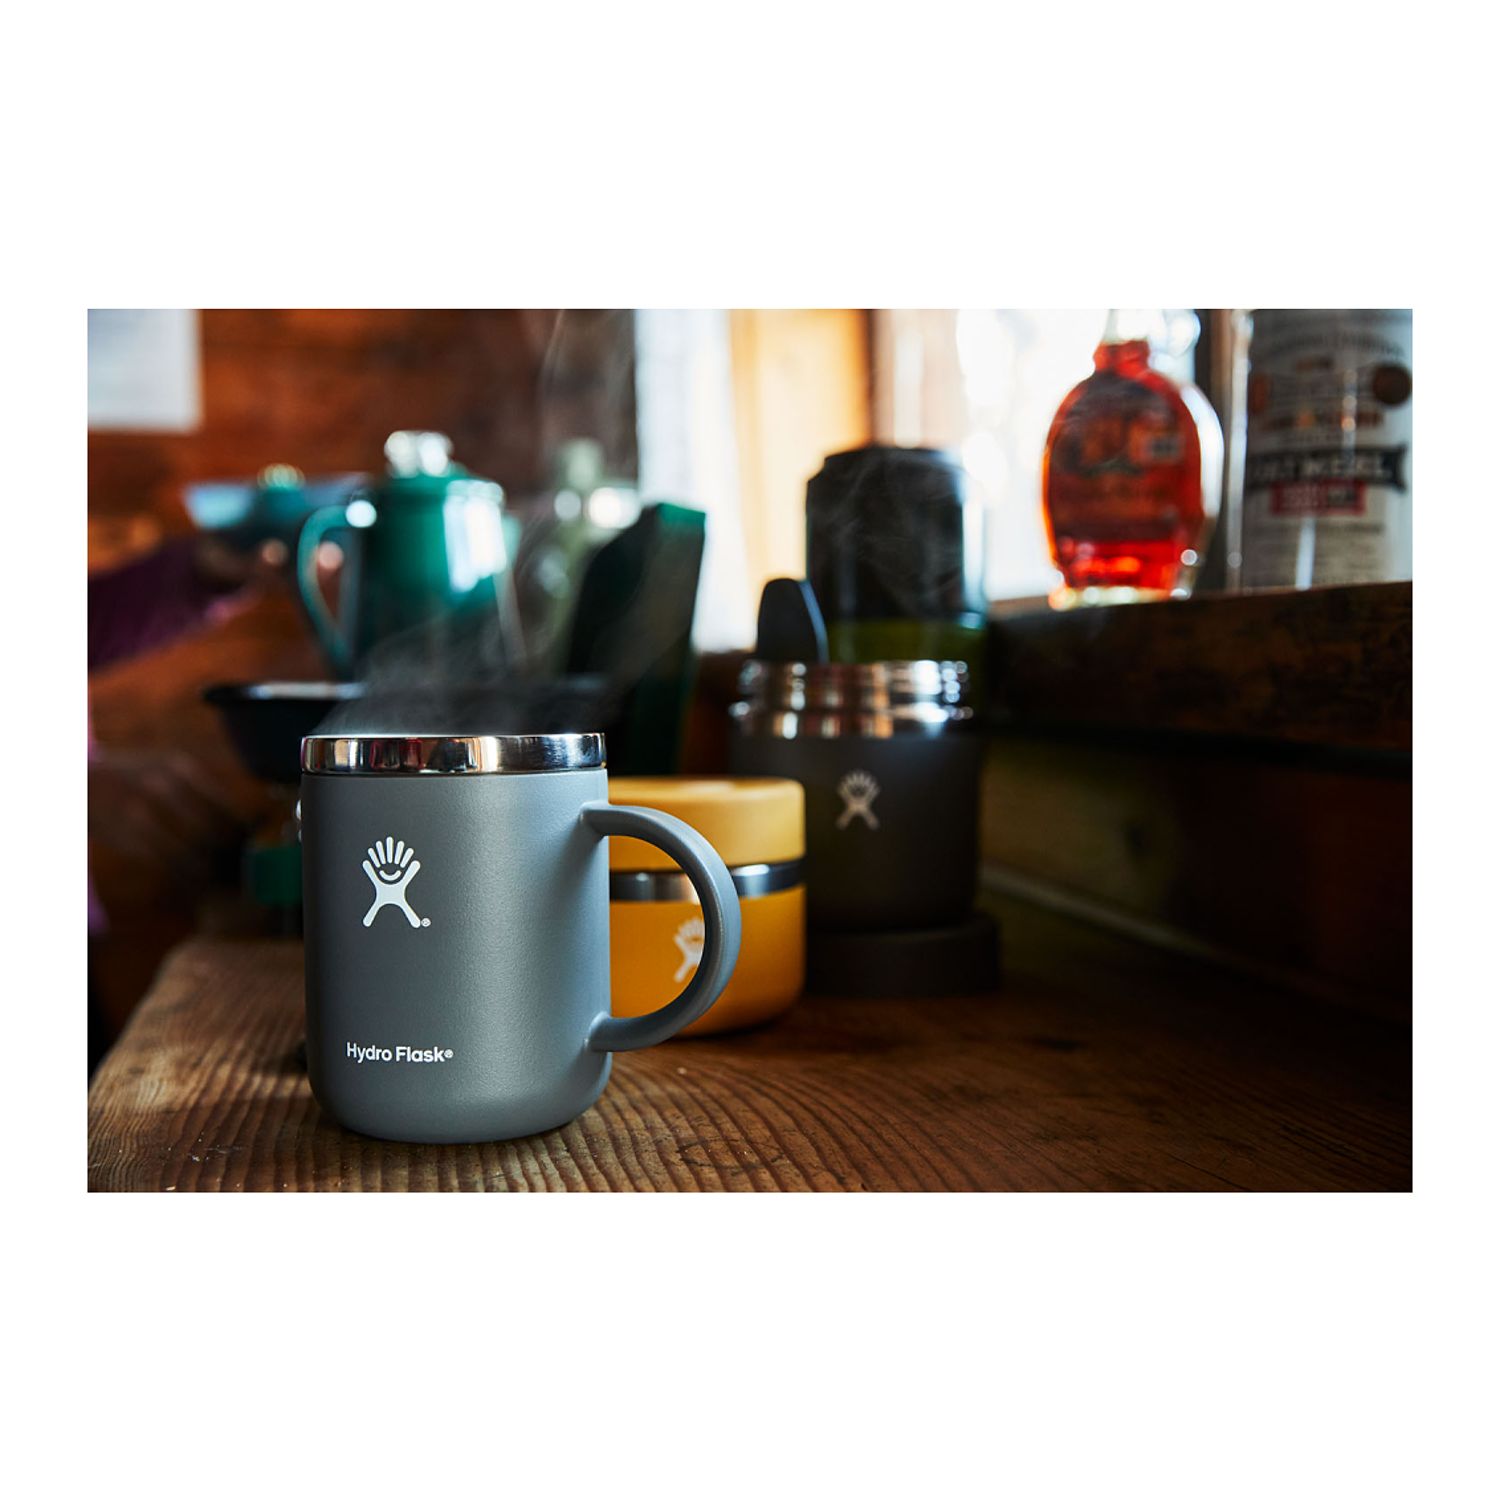 Branded Hydro Flask Coffee Mug